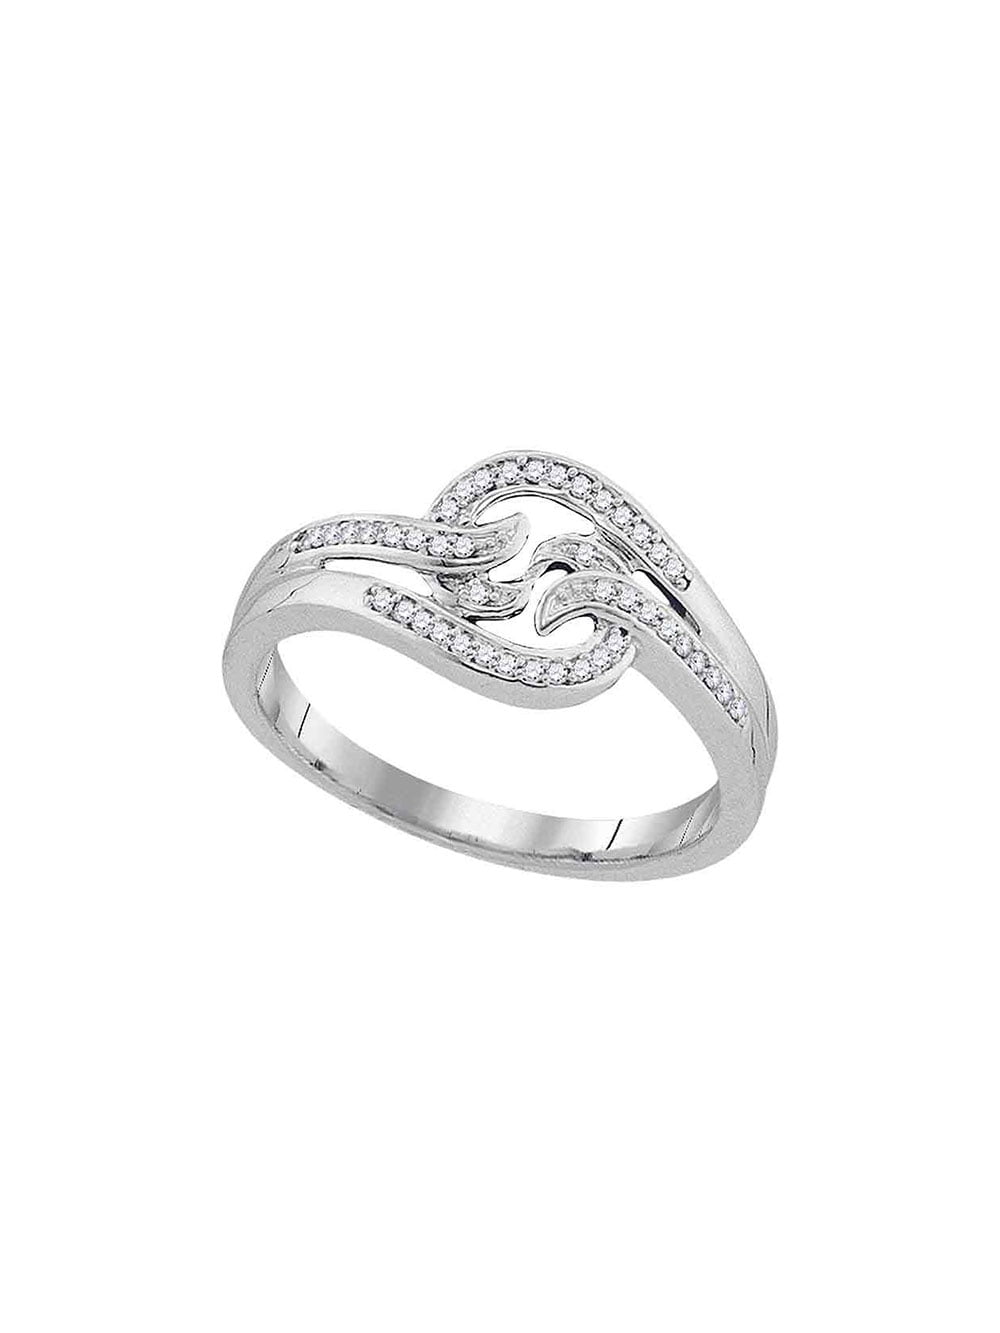 10K White Gold Diamond Anniversary Wedding Band Swirl Ring 1/4 CT Size 8 